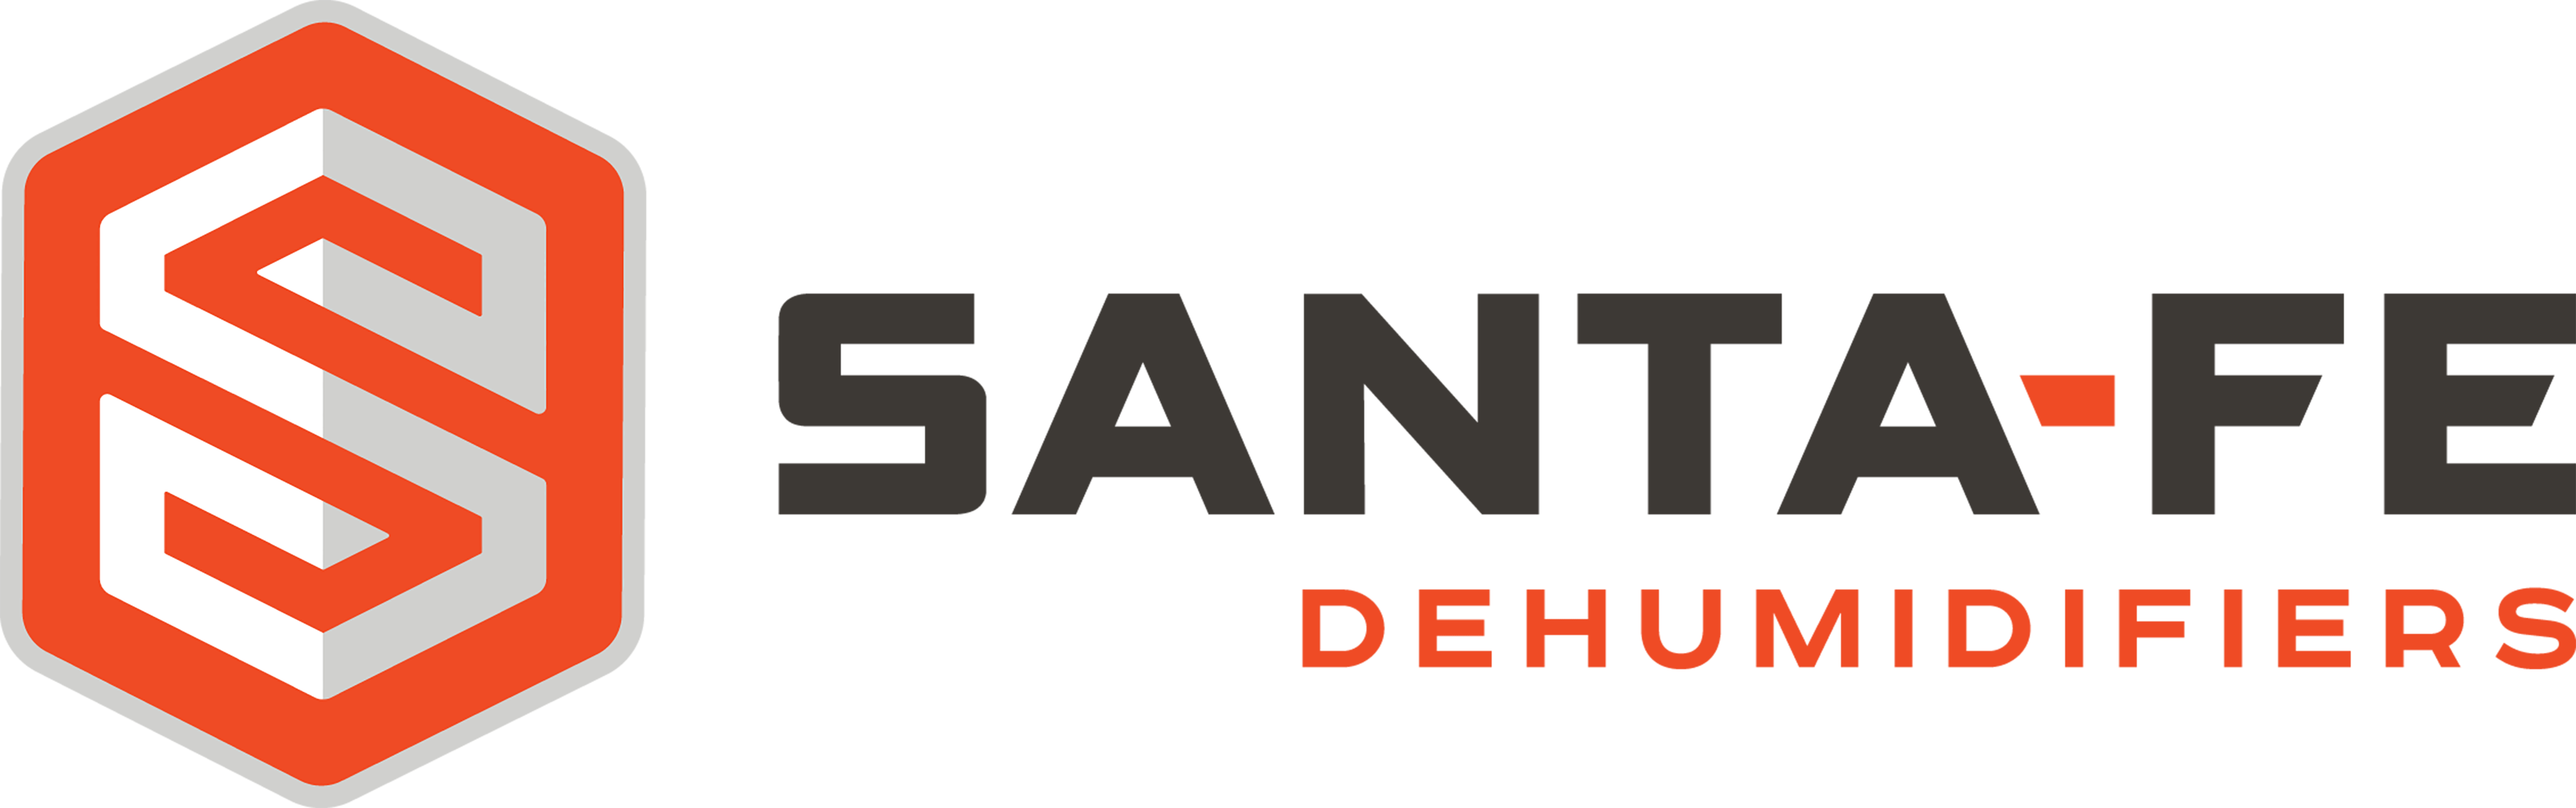 Santa Fe Logo - Media Resources - Santa Fe - Basement and Crawl Space Dehumidifiers